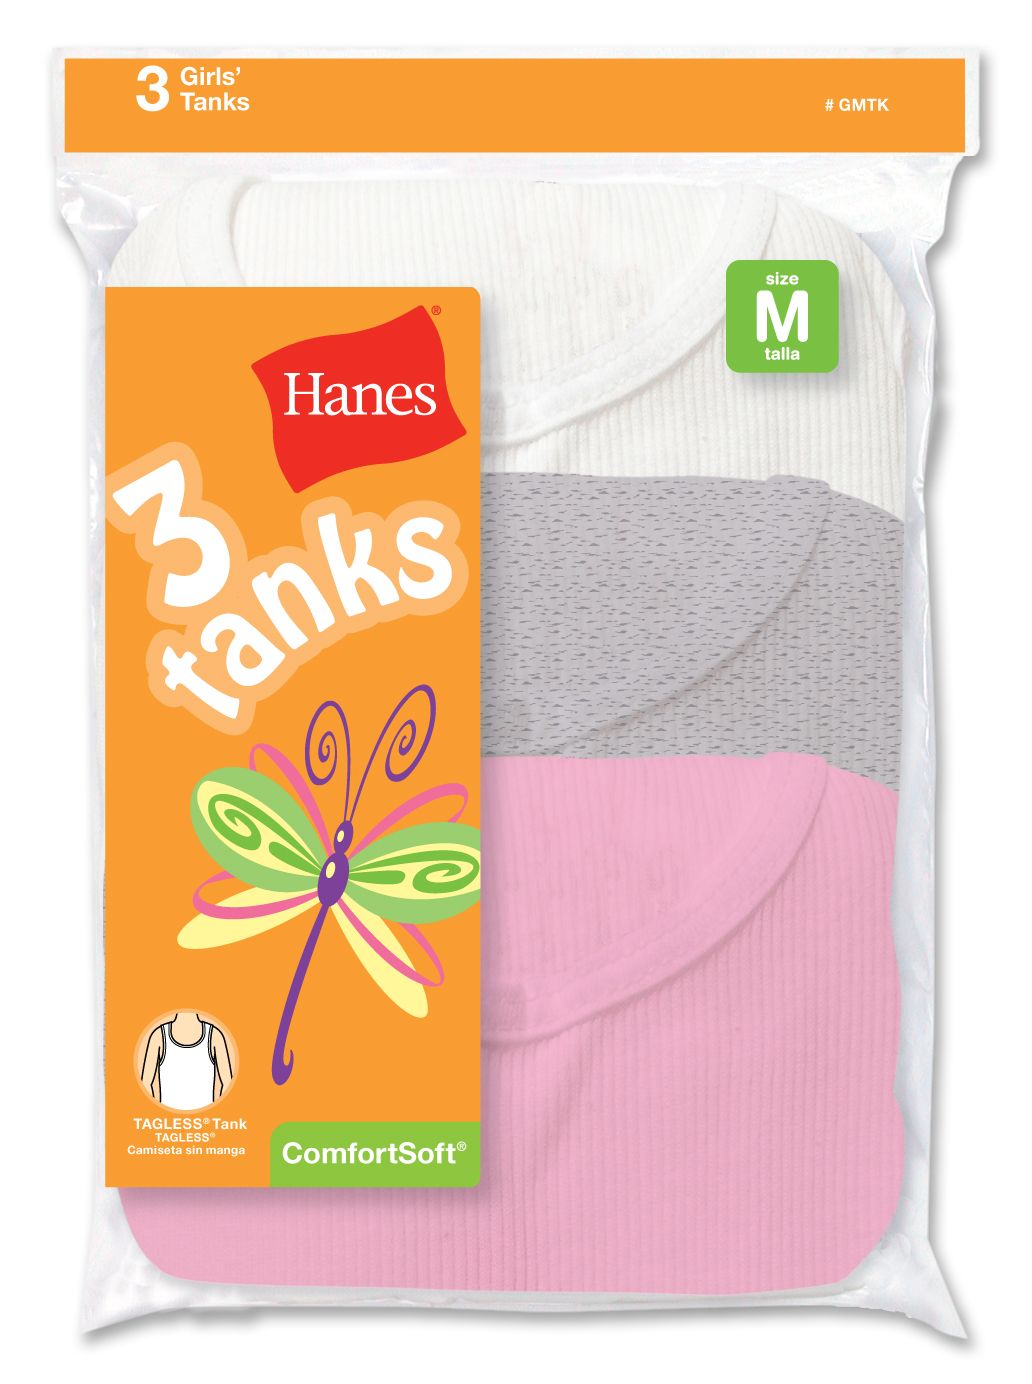 Hanes Girls Tanks Assorted 3-Pack